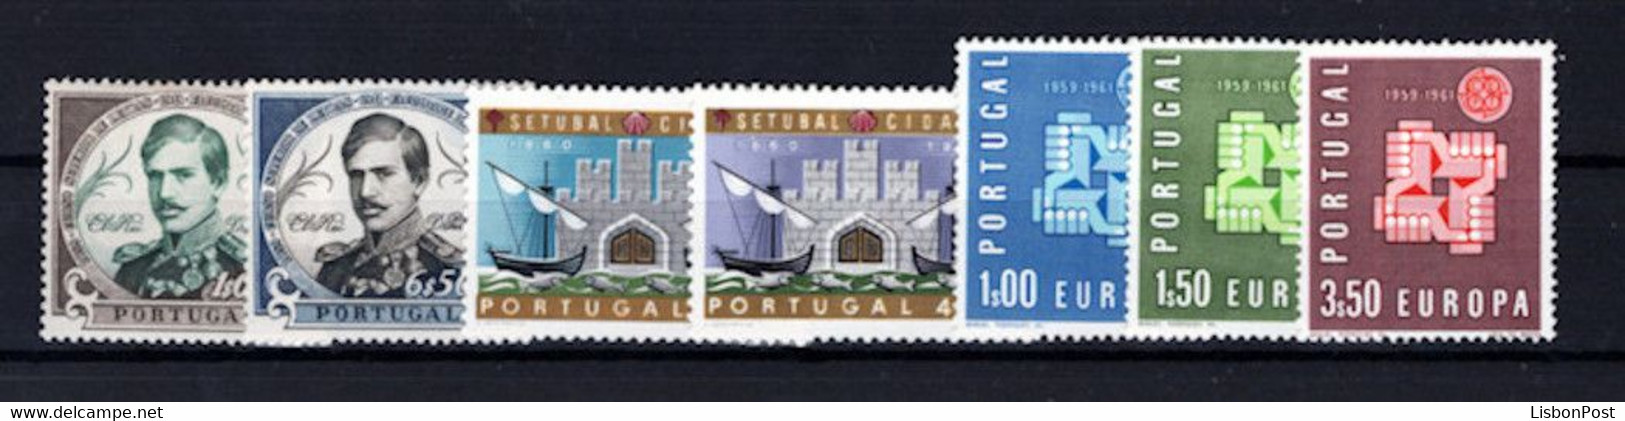 1961 Portugal Complete Year MNH Stamps. Année Compléte Timbres Neuf Sans Charnière. Ano Completo Novo Sem Charneira. - Années Complètes